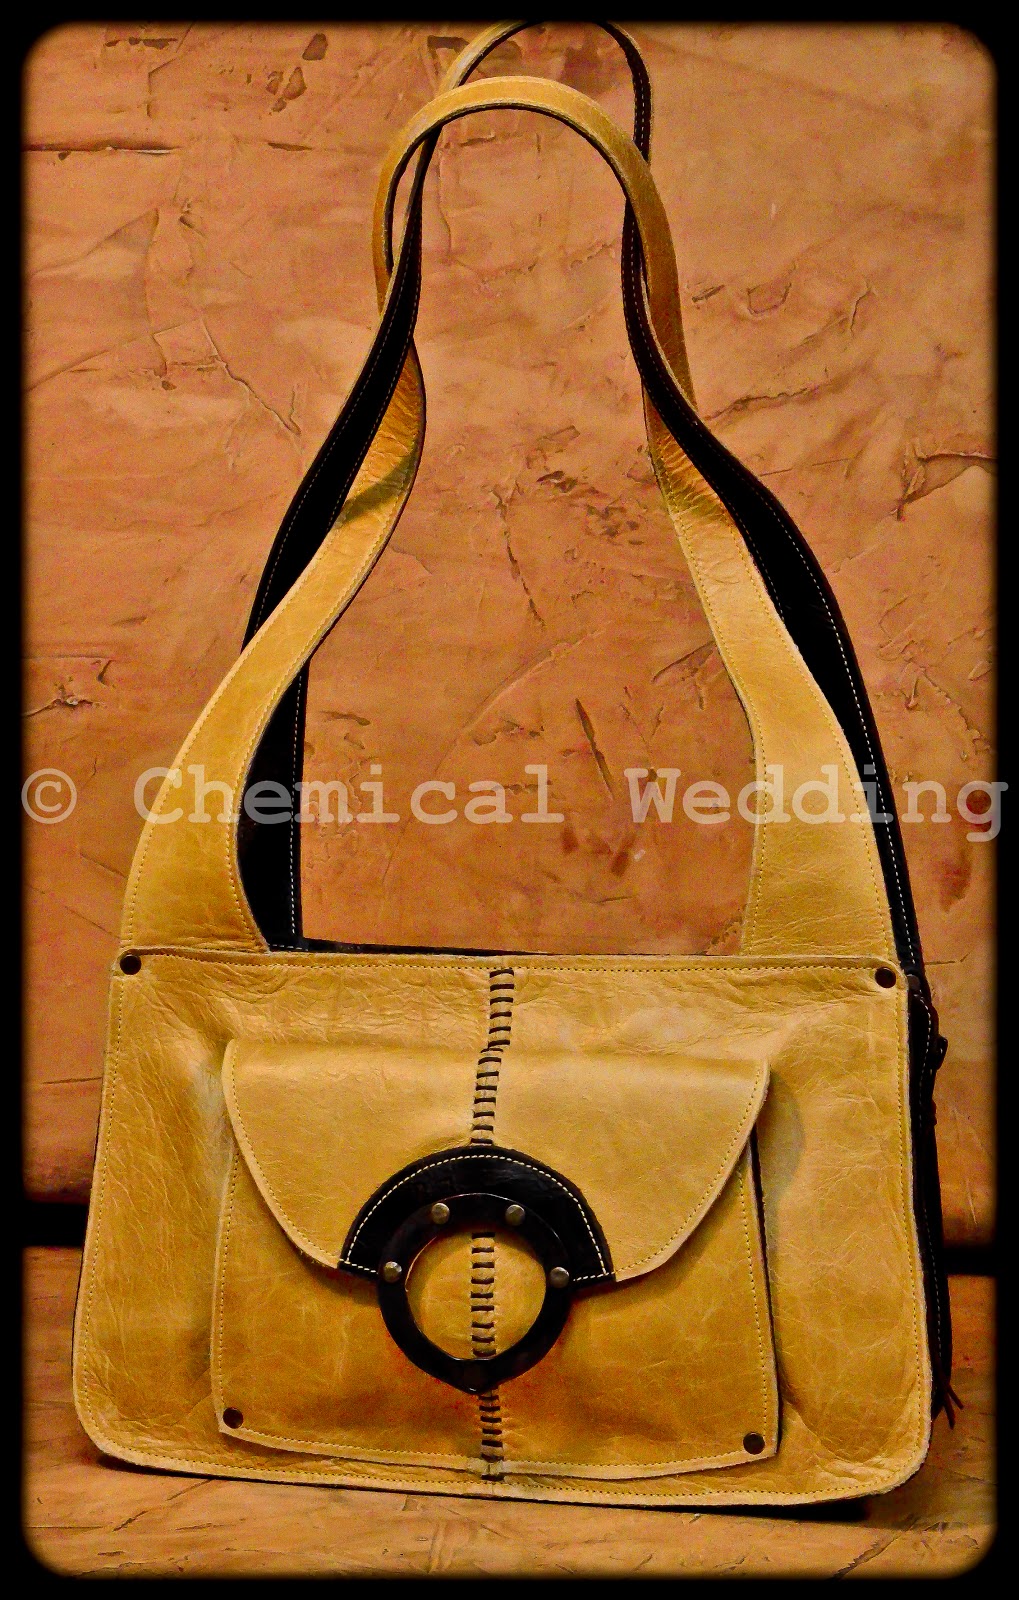 chemical wedding handbags